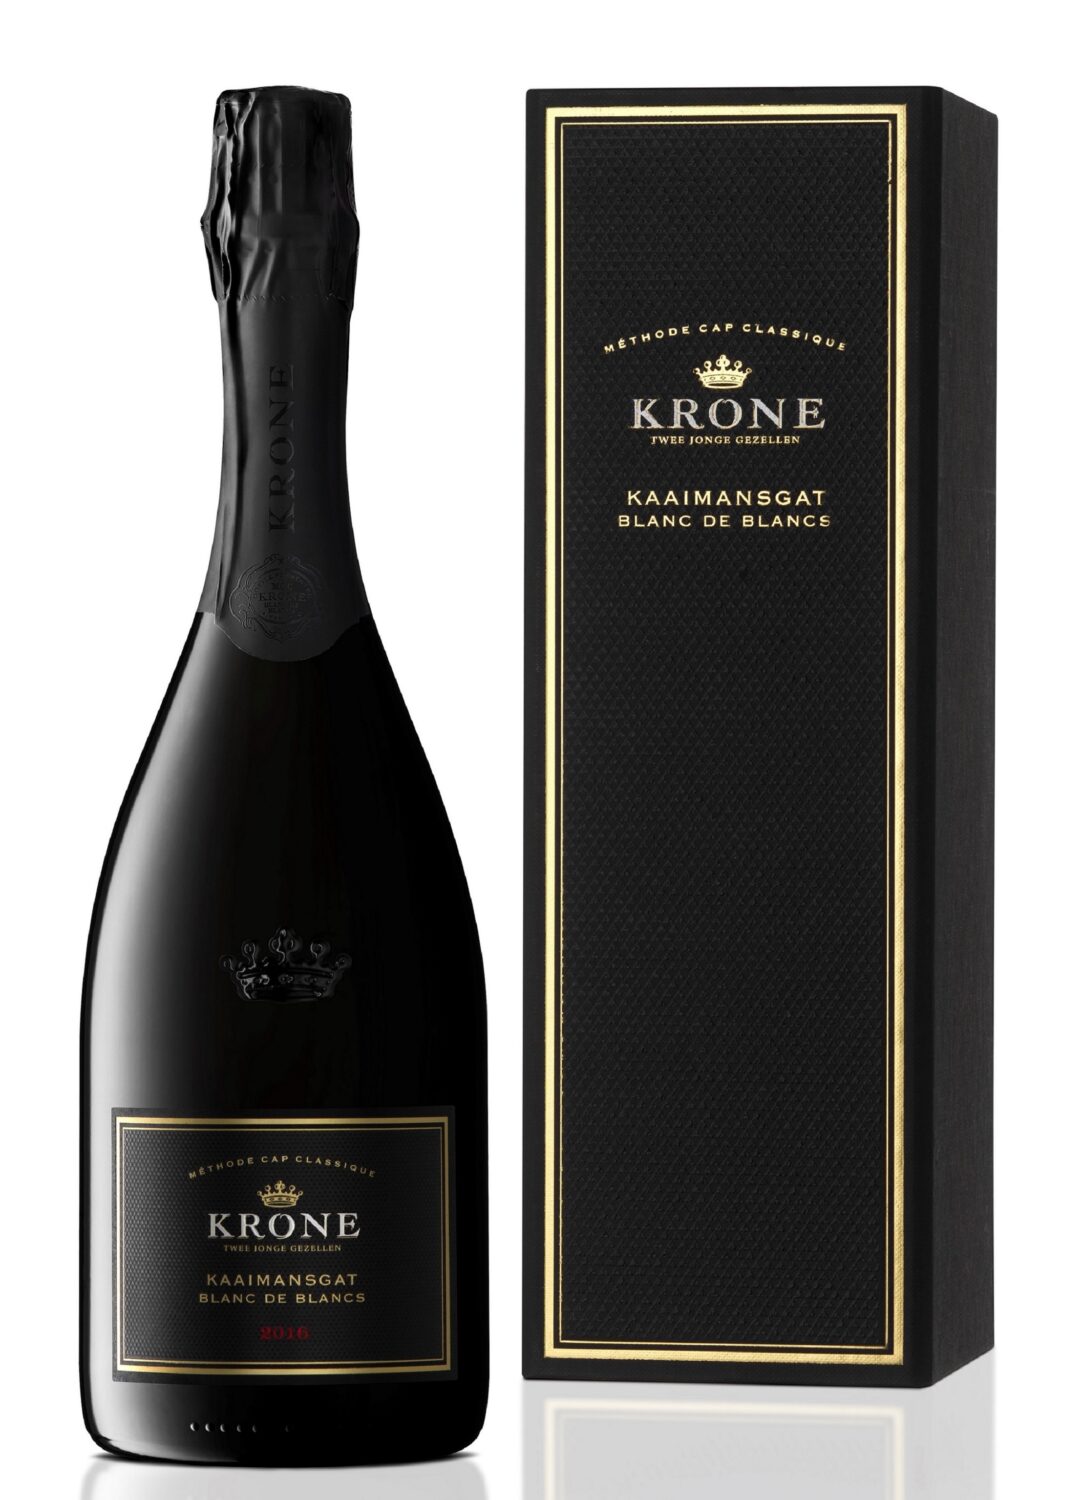 Krone Kaaimansgat Blanc de Blancs 2016 with Gift Box